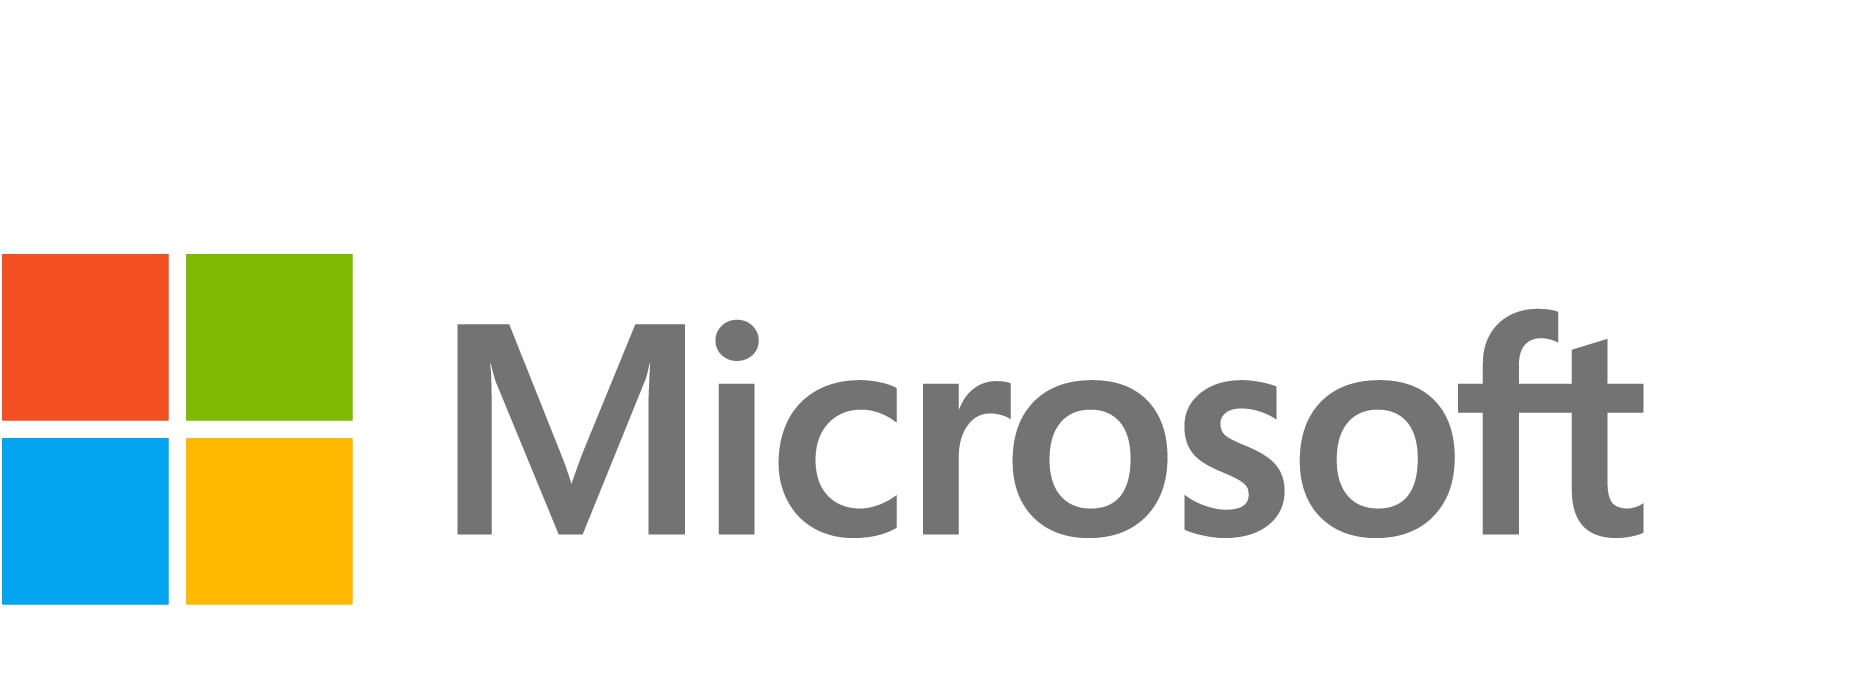 Microsoft Dynamics 365 for Sales Premium - transition subscription license